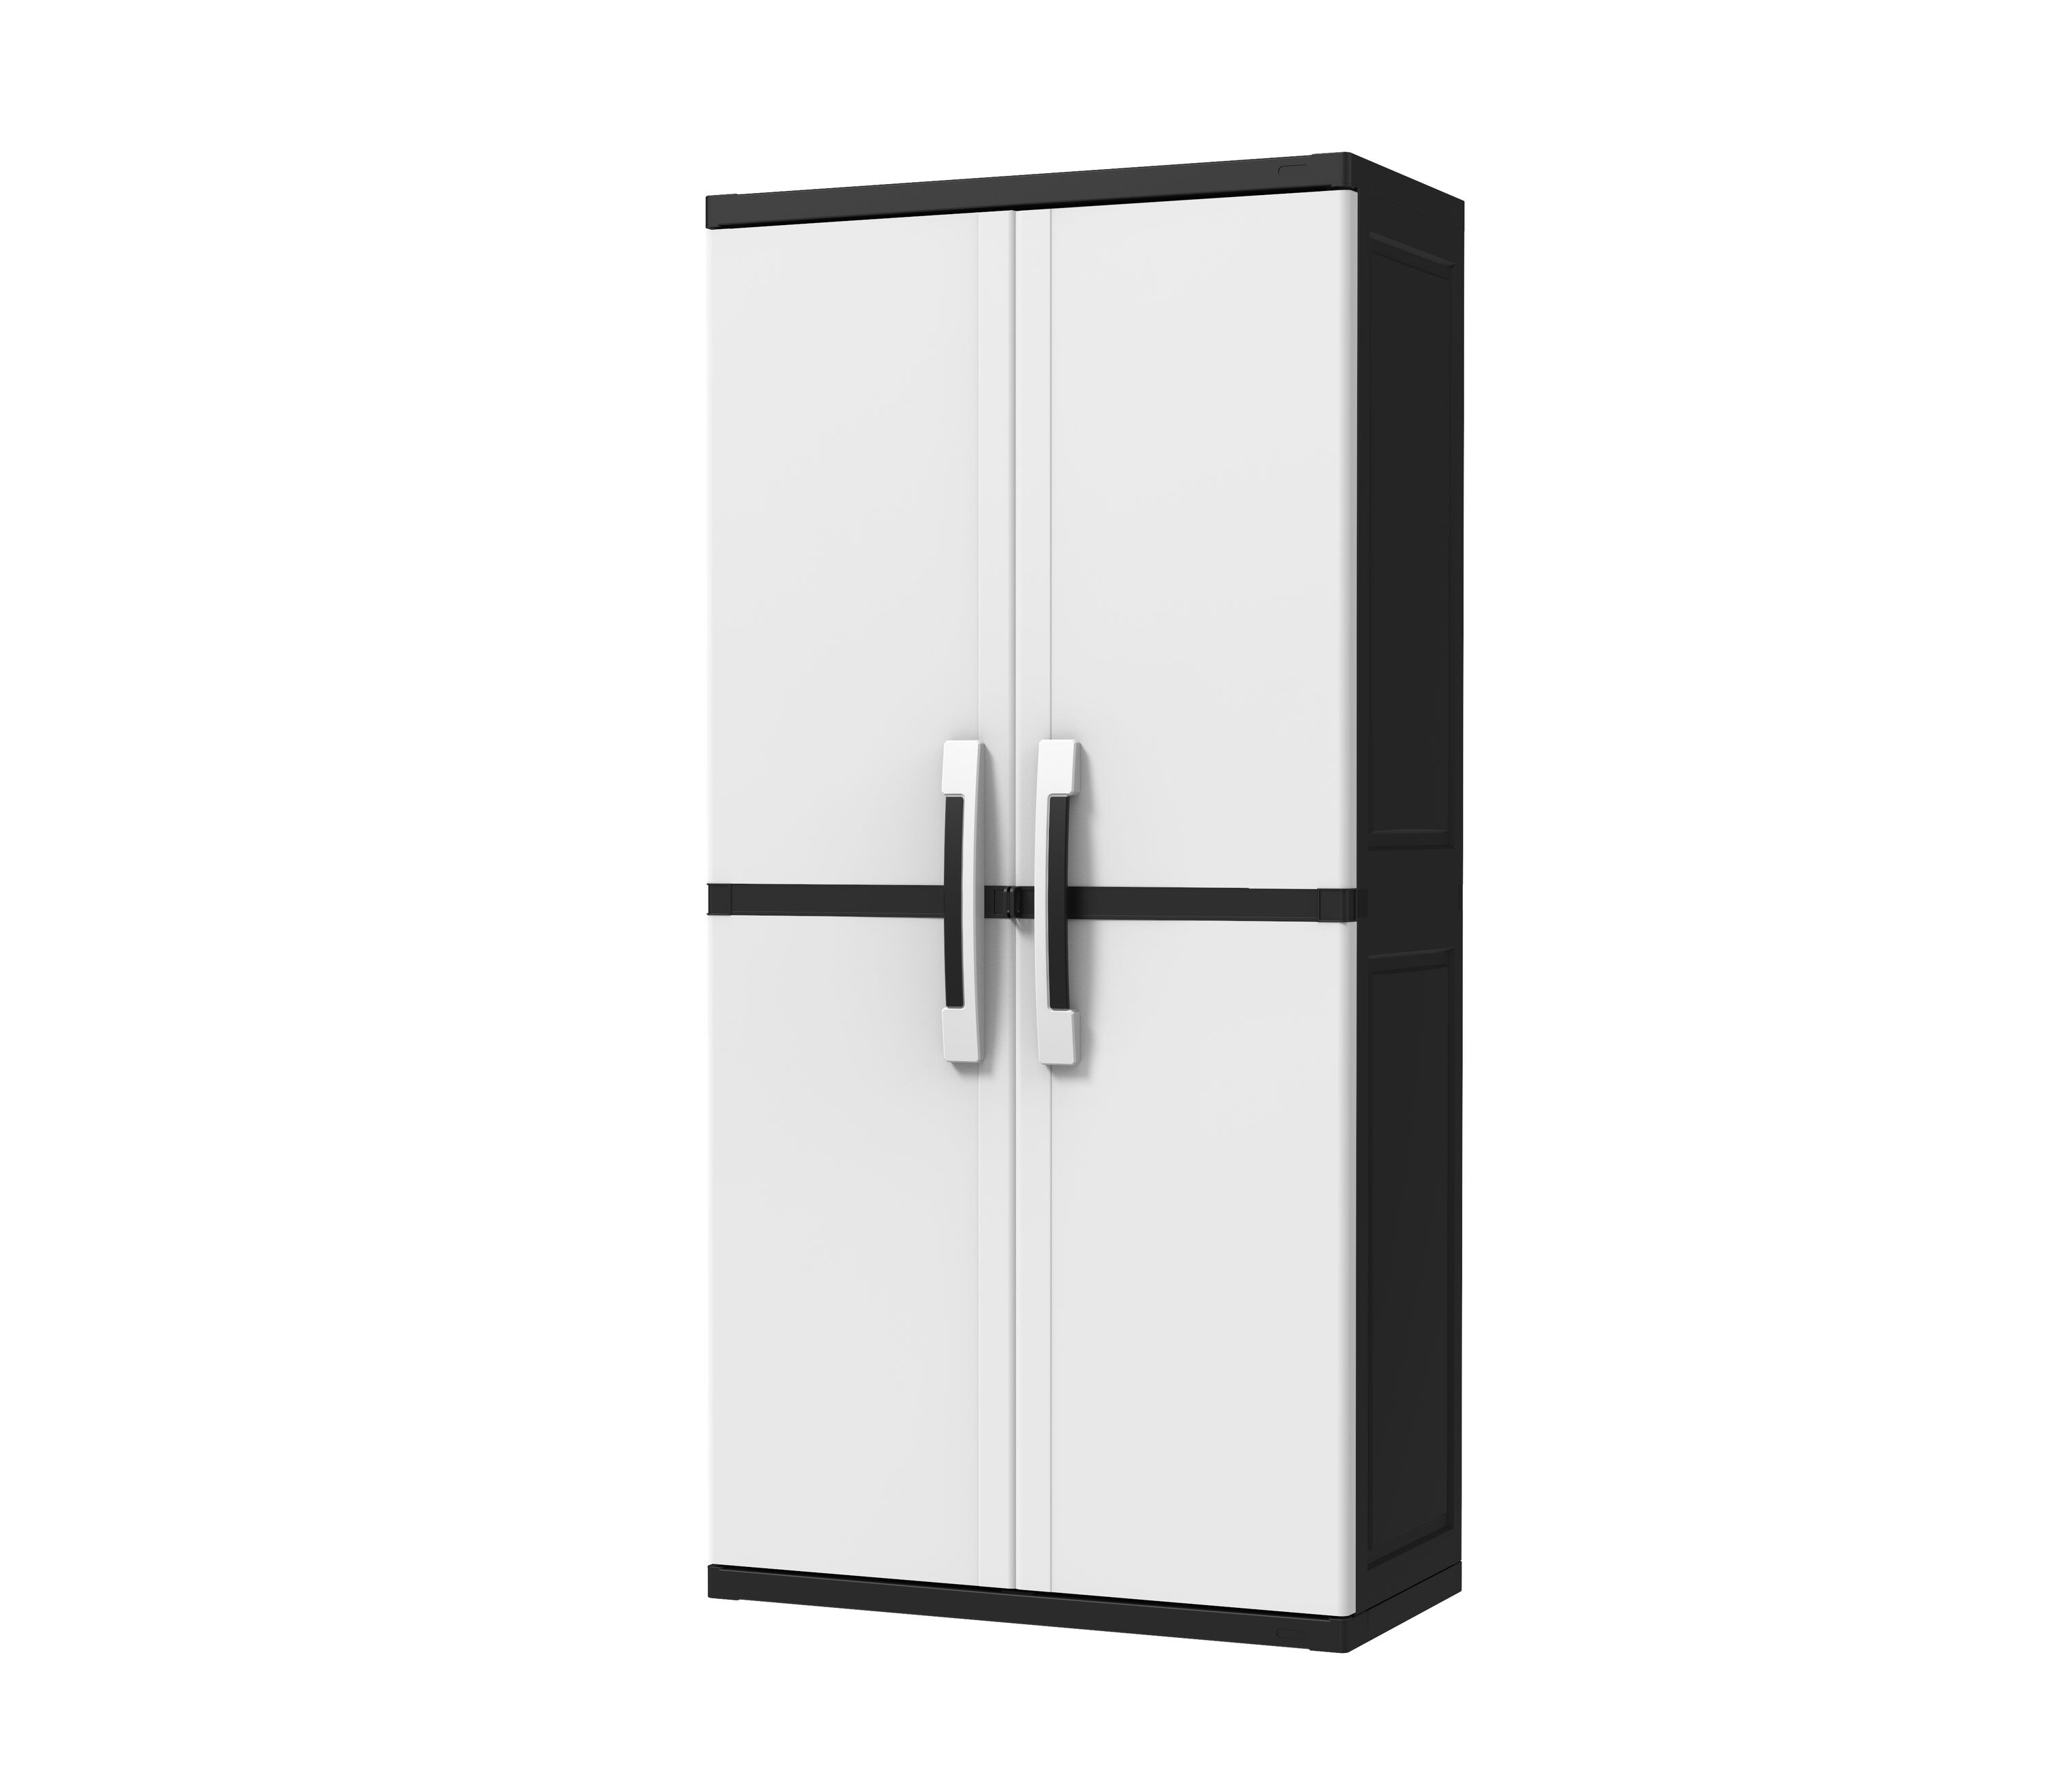 Keter 227138 Space Winner Adjustable Garage Storage Gray Resin Utility Cabinet for sale online 